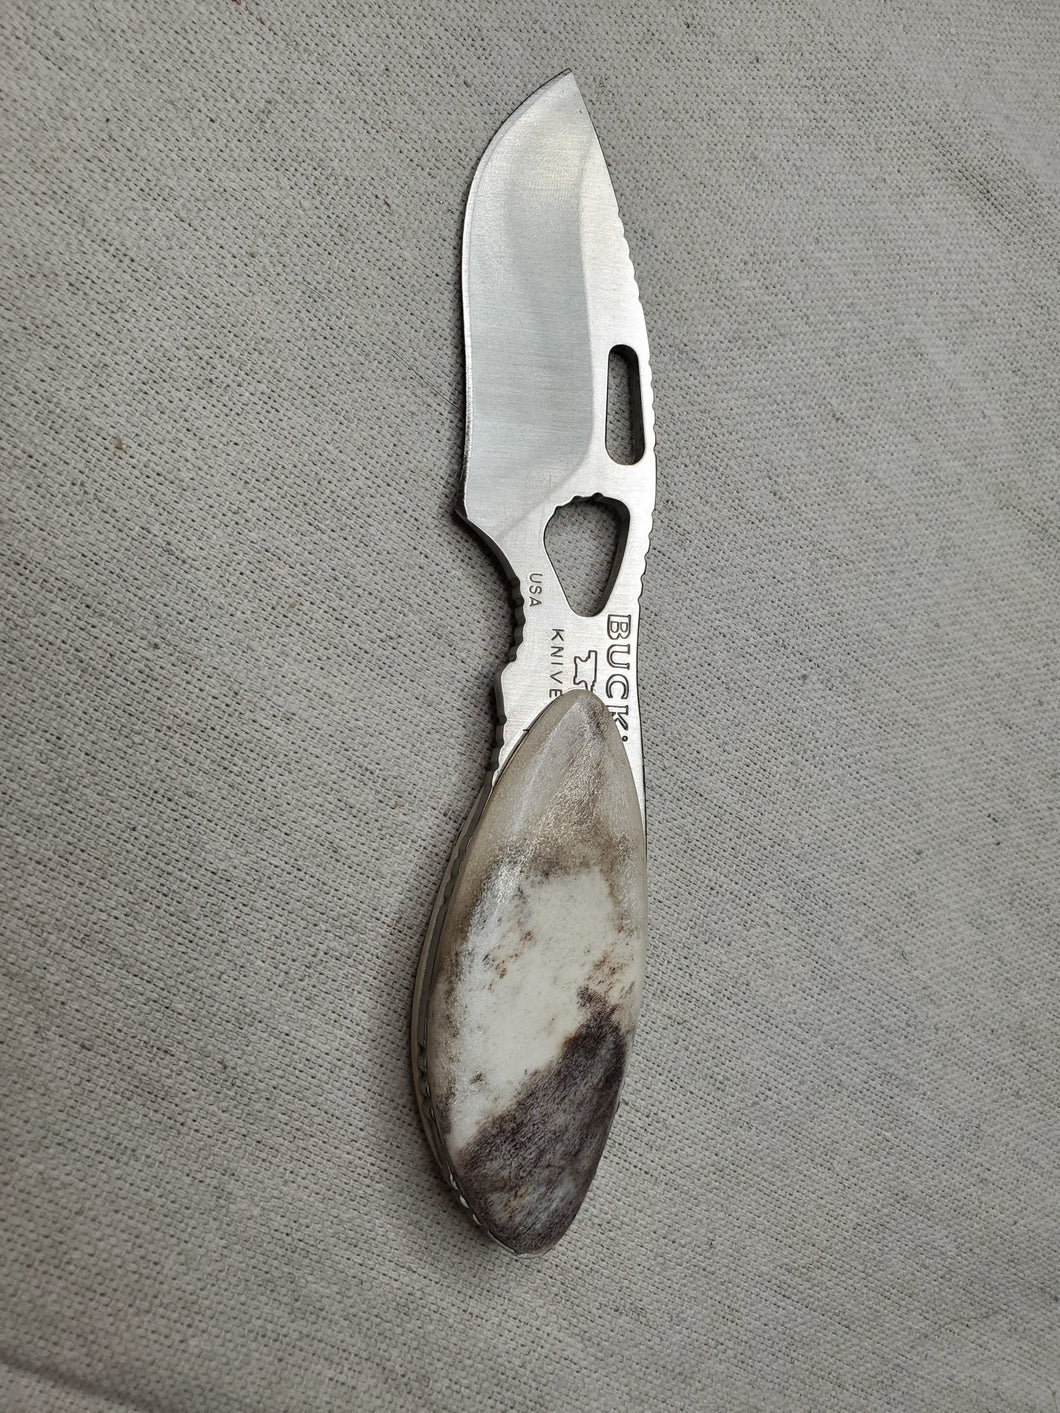 Moose Antler Buck Knife (1)